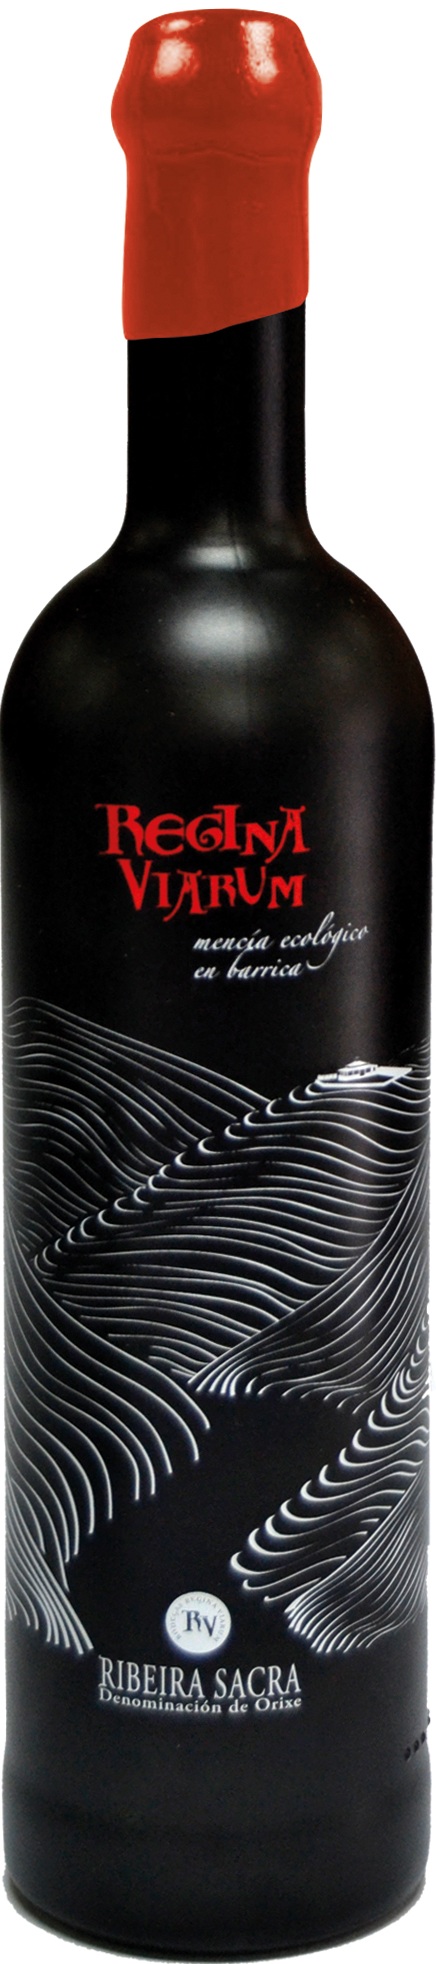 Logo Wein Regina Viarum Mencía Ecológico en barrica